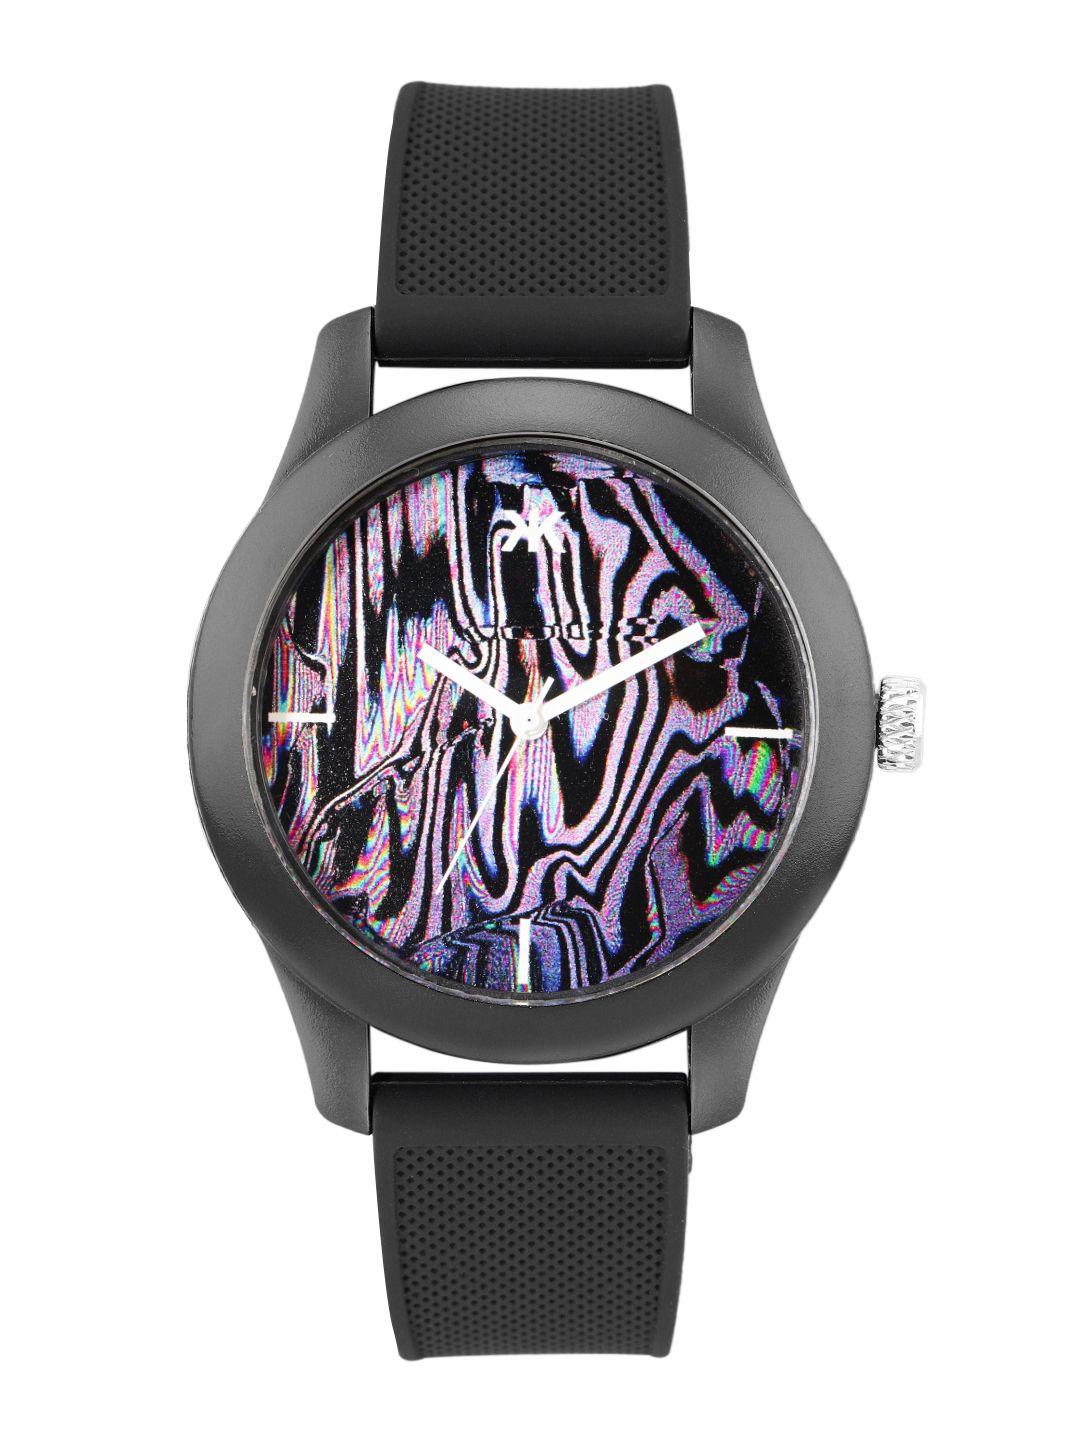 kook n keech unisex multicoloured printed analogue watch knk225f